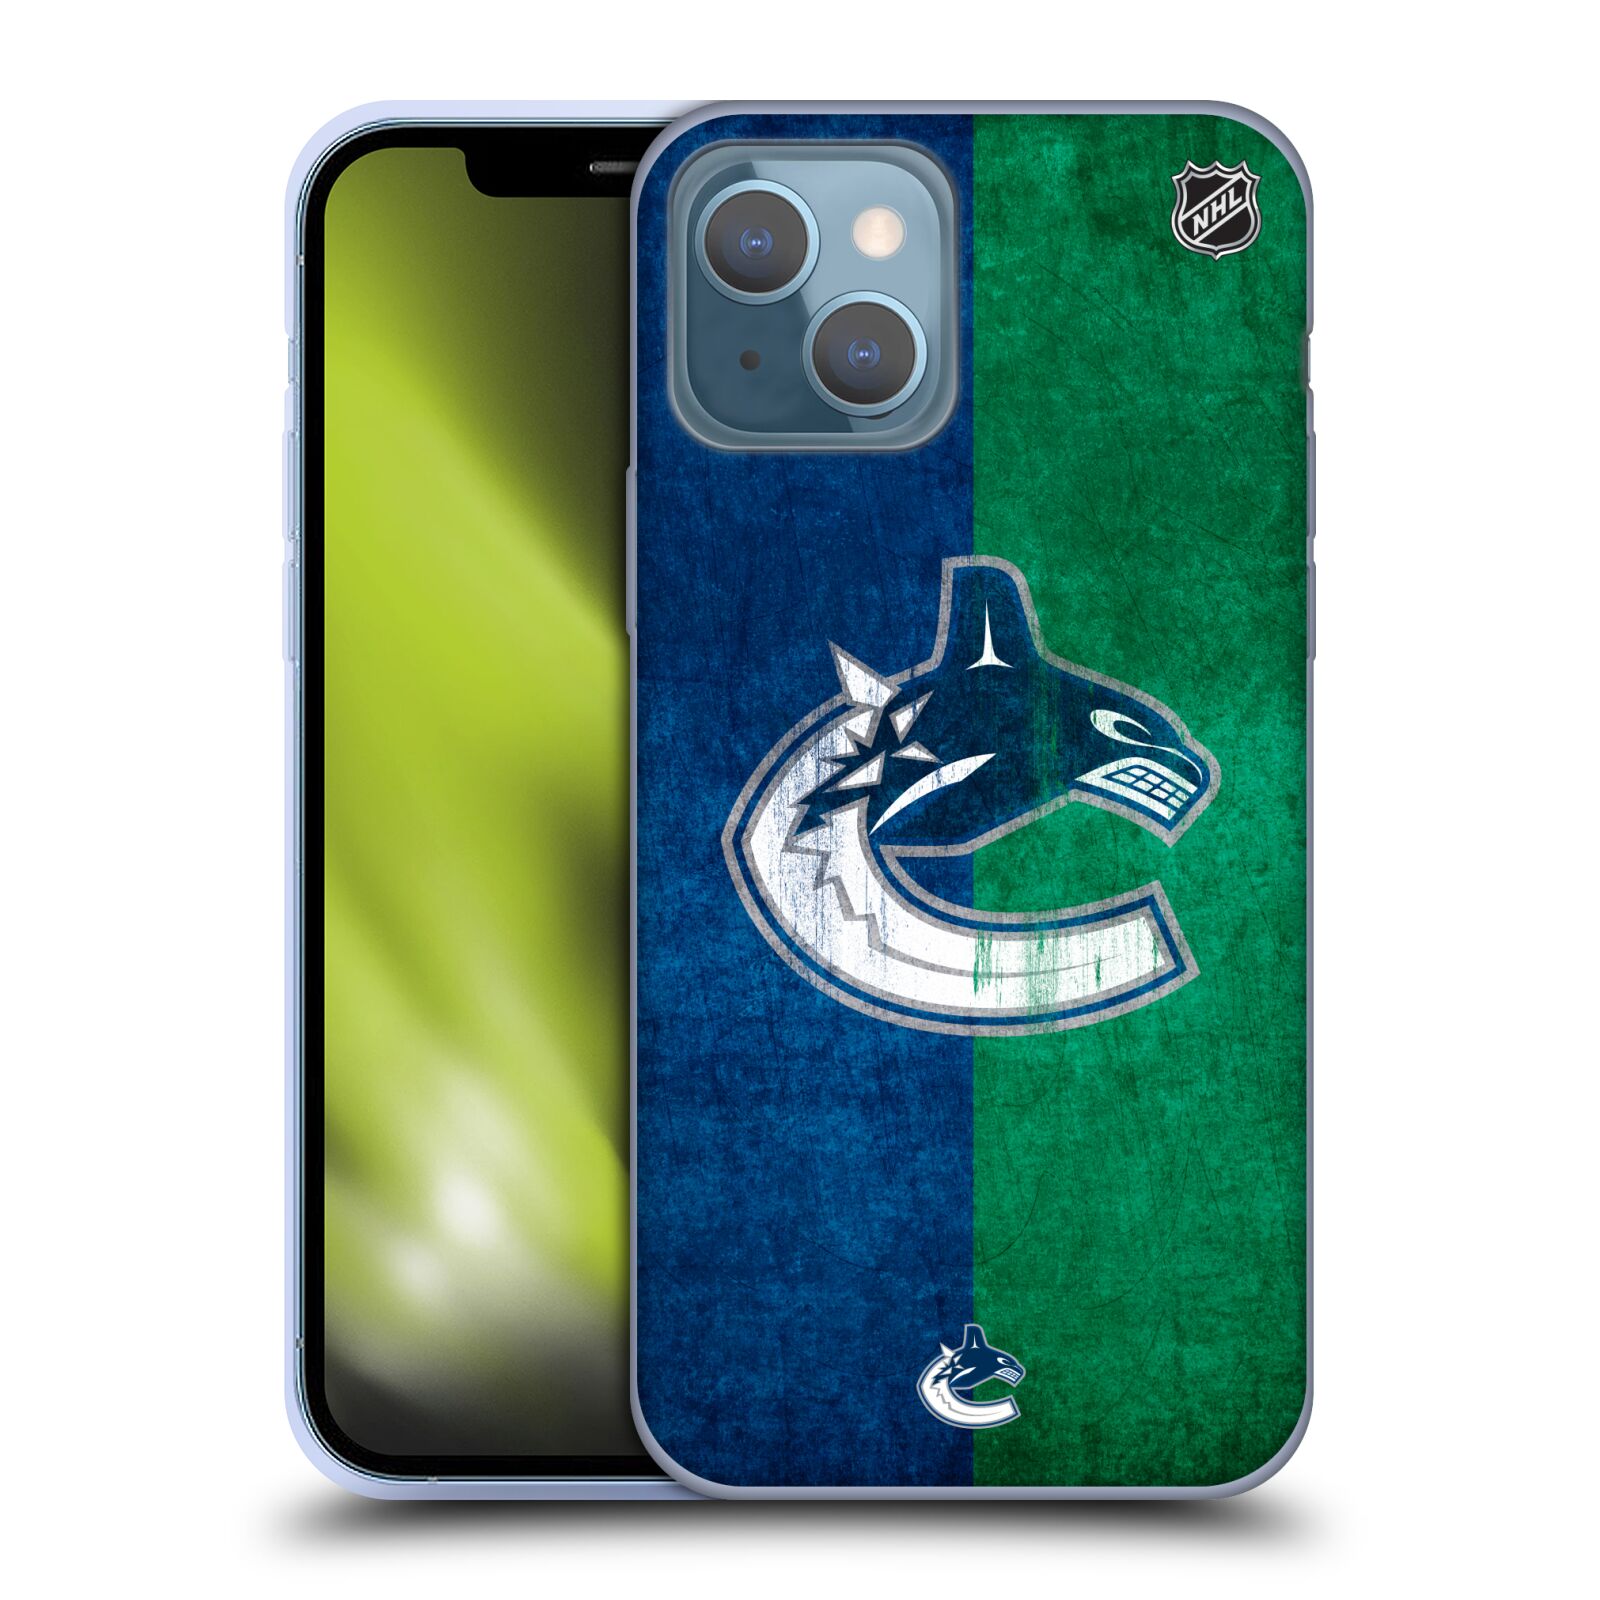 Silikonové pouzdro na mobil Apple iPhone 13 - NHL - Půlené logo Vancouver Canucks (Silikonový kryt, obal, pouzdro na mobilní telefon Apple iPhone 13 s licencovaným motivem NHL - Půlené logo Vancouver Canucks)